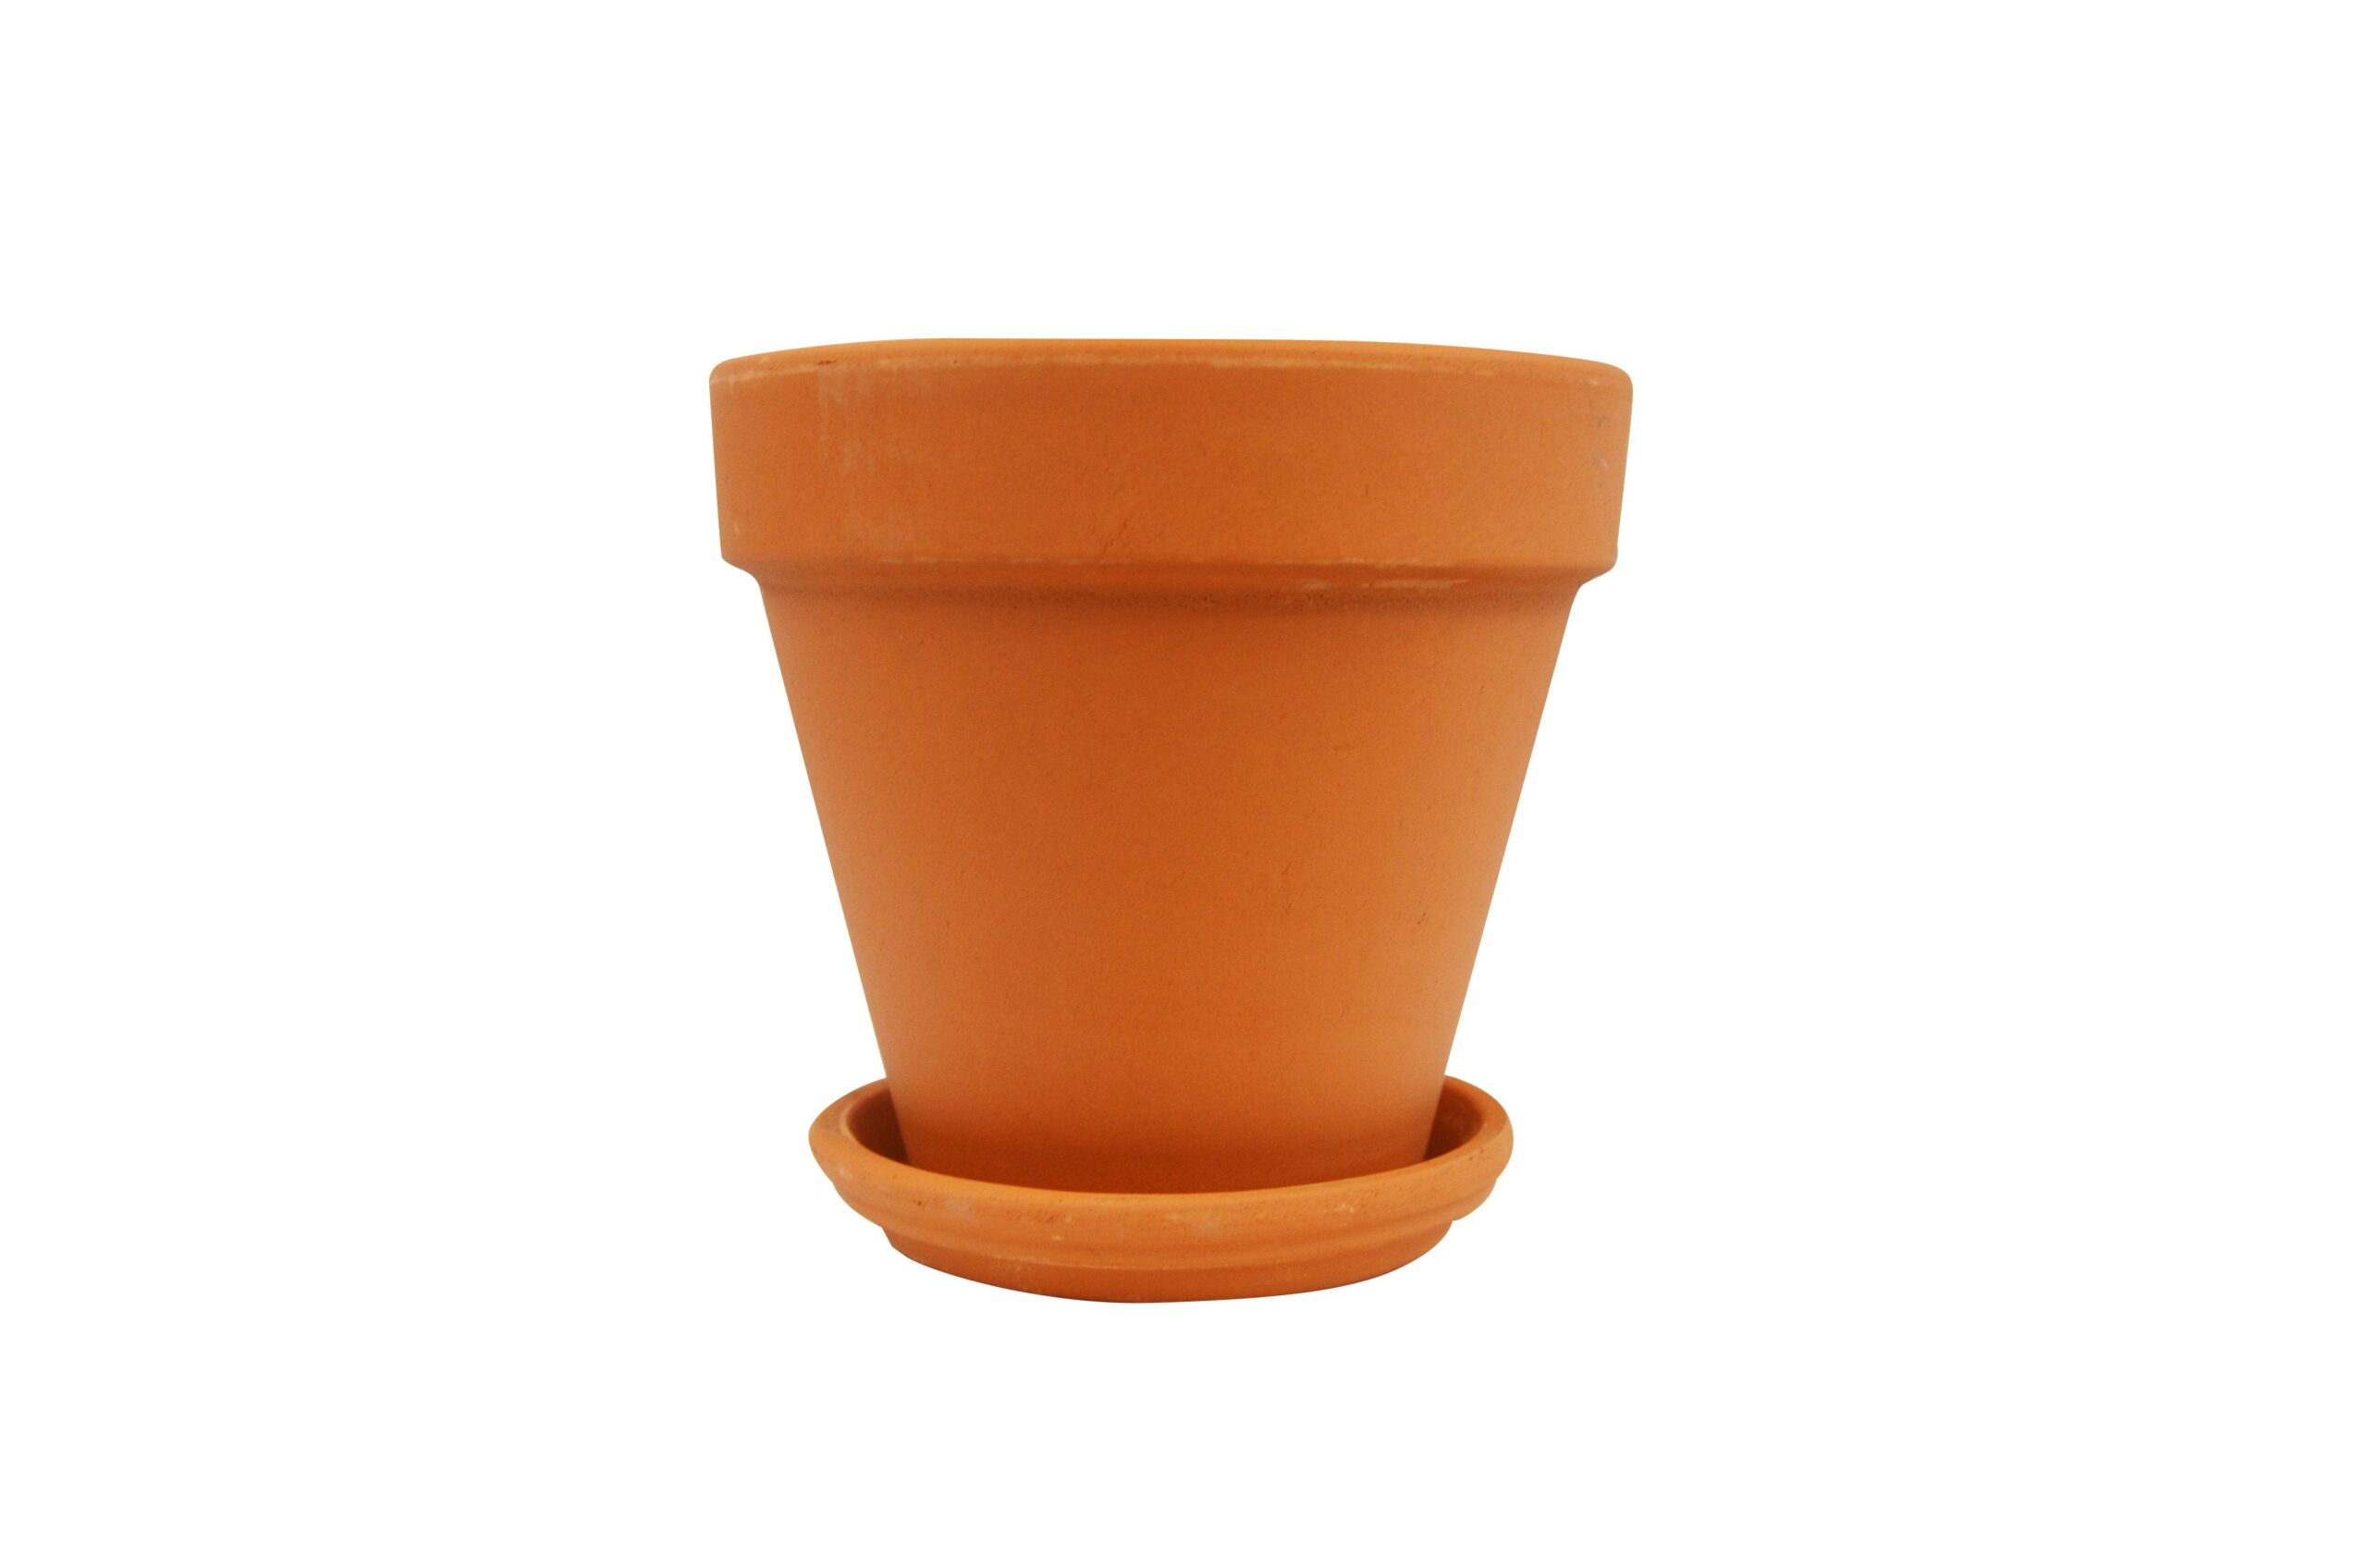 A small orange clay pot at a plant nursery near me.